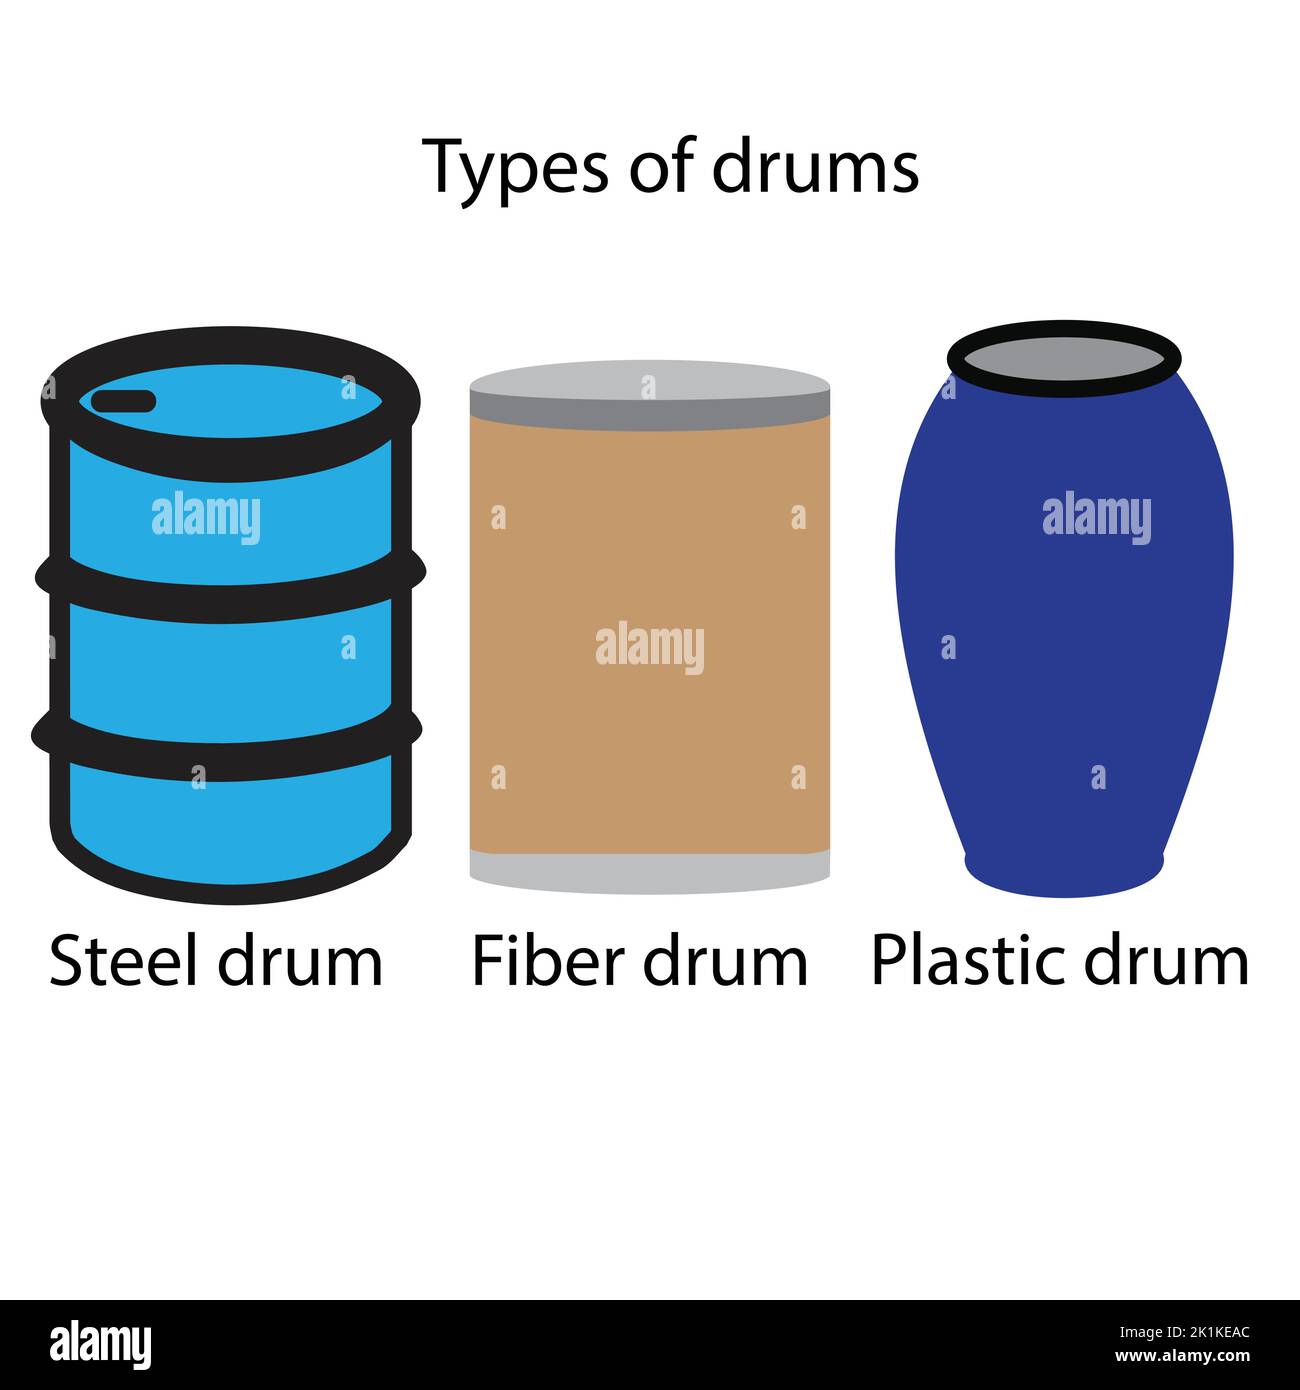 https://c8.alamy.com/comp/2K1KEAC/three-types-of-drums-like-steel-fiber-and-plastic-drum-2K1KEAC.jpg